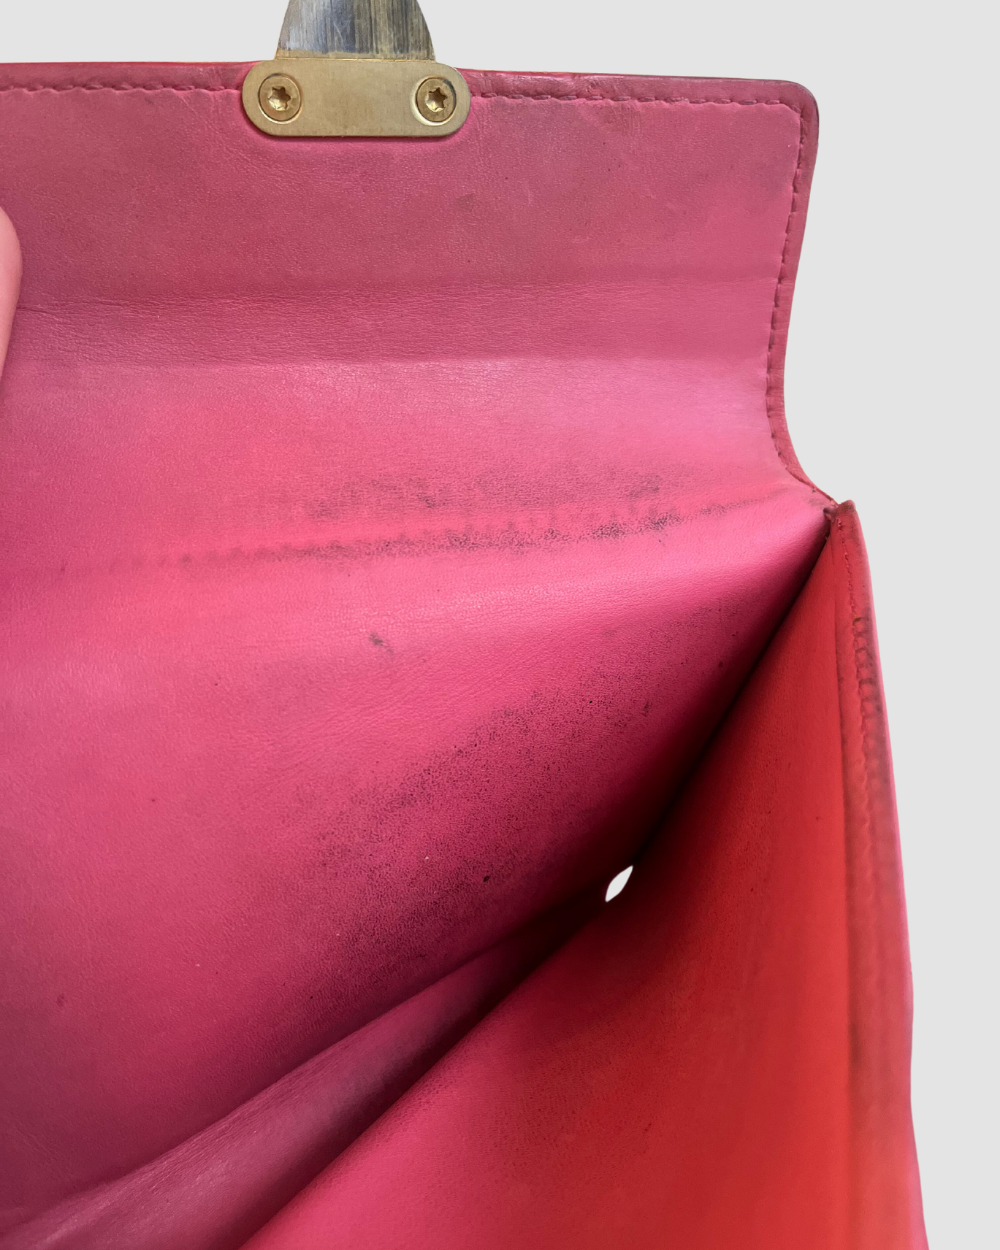 Louis Vuitton Vernis Hot Pink Snap Wallet